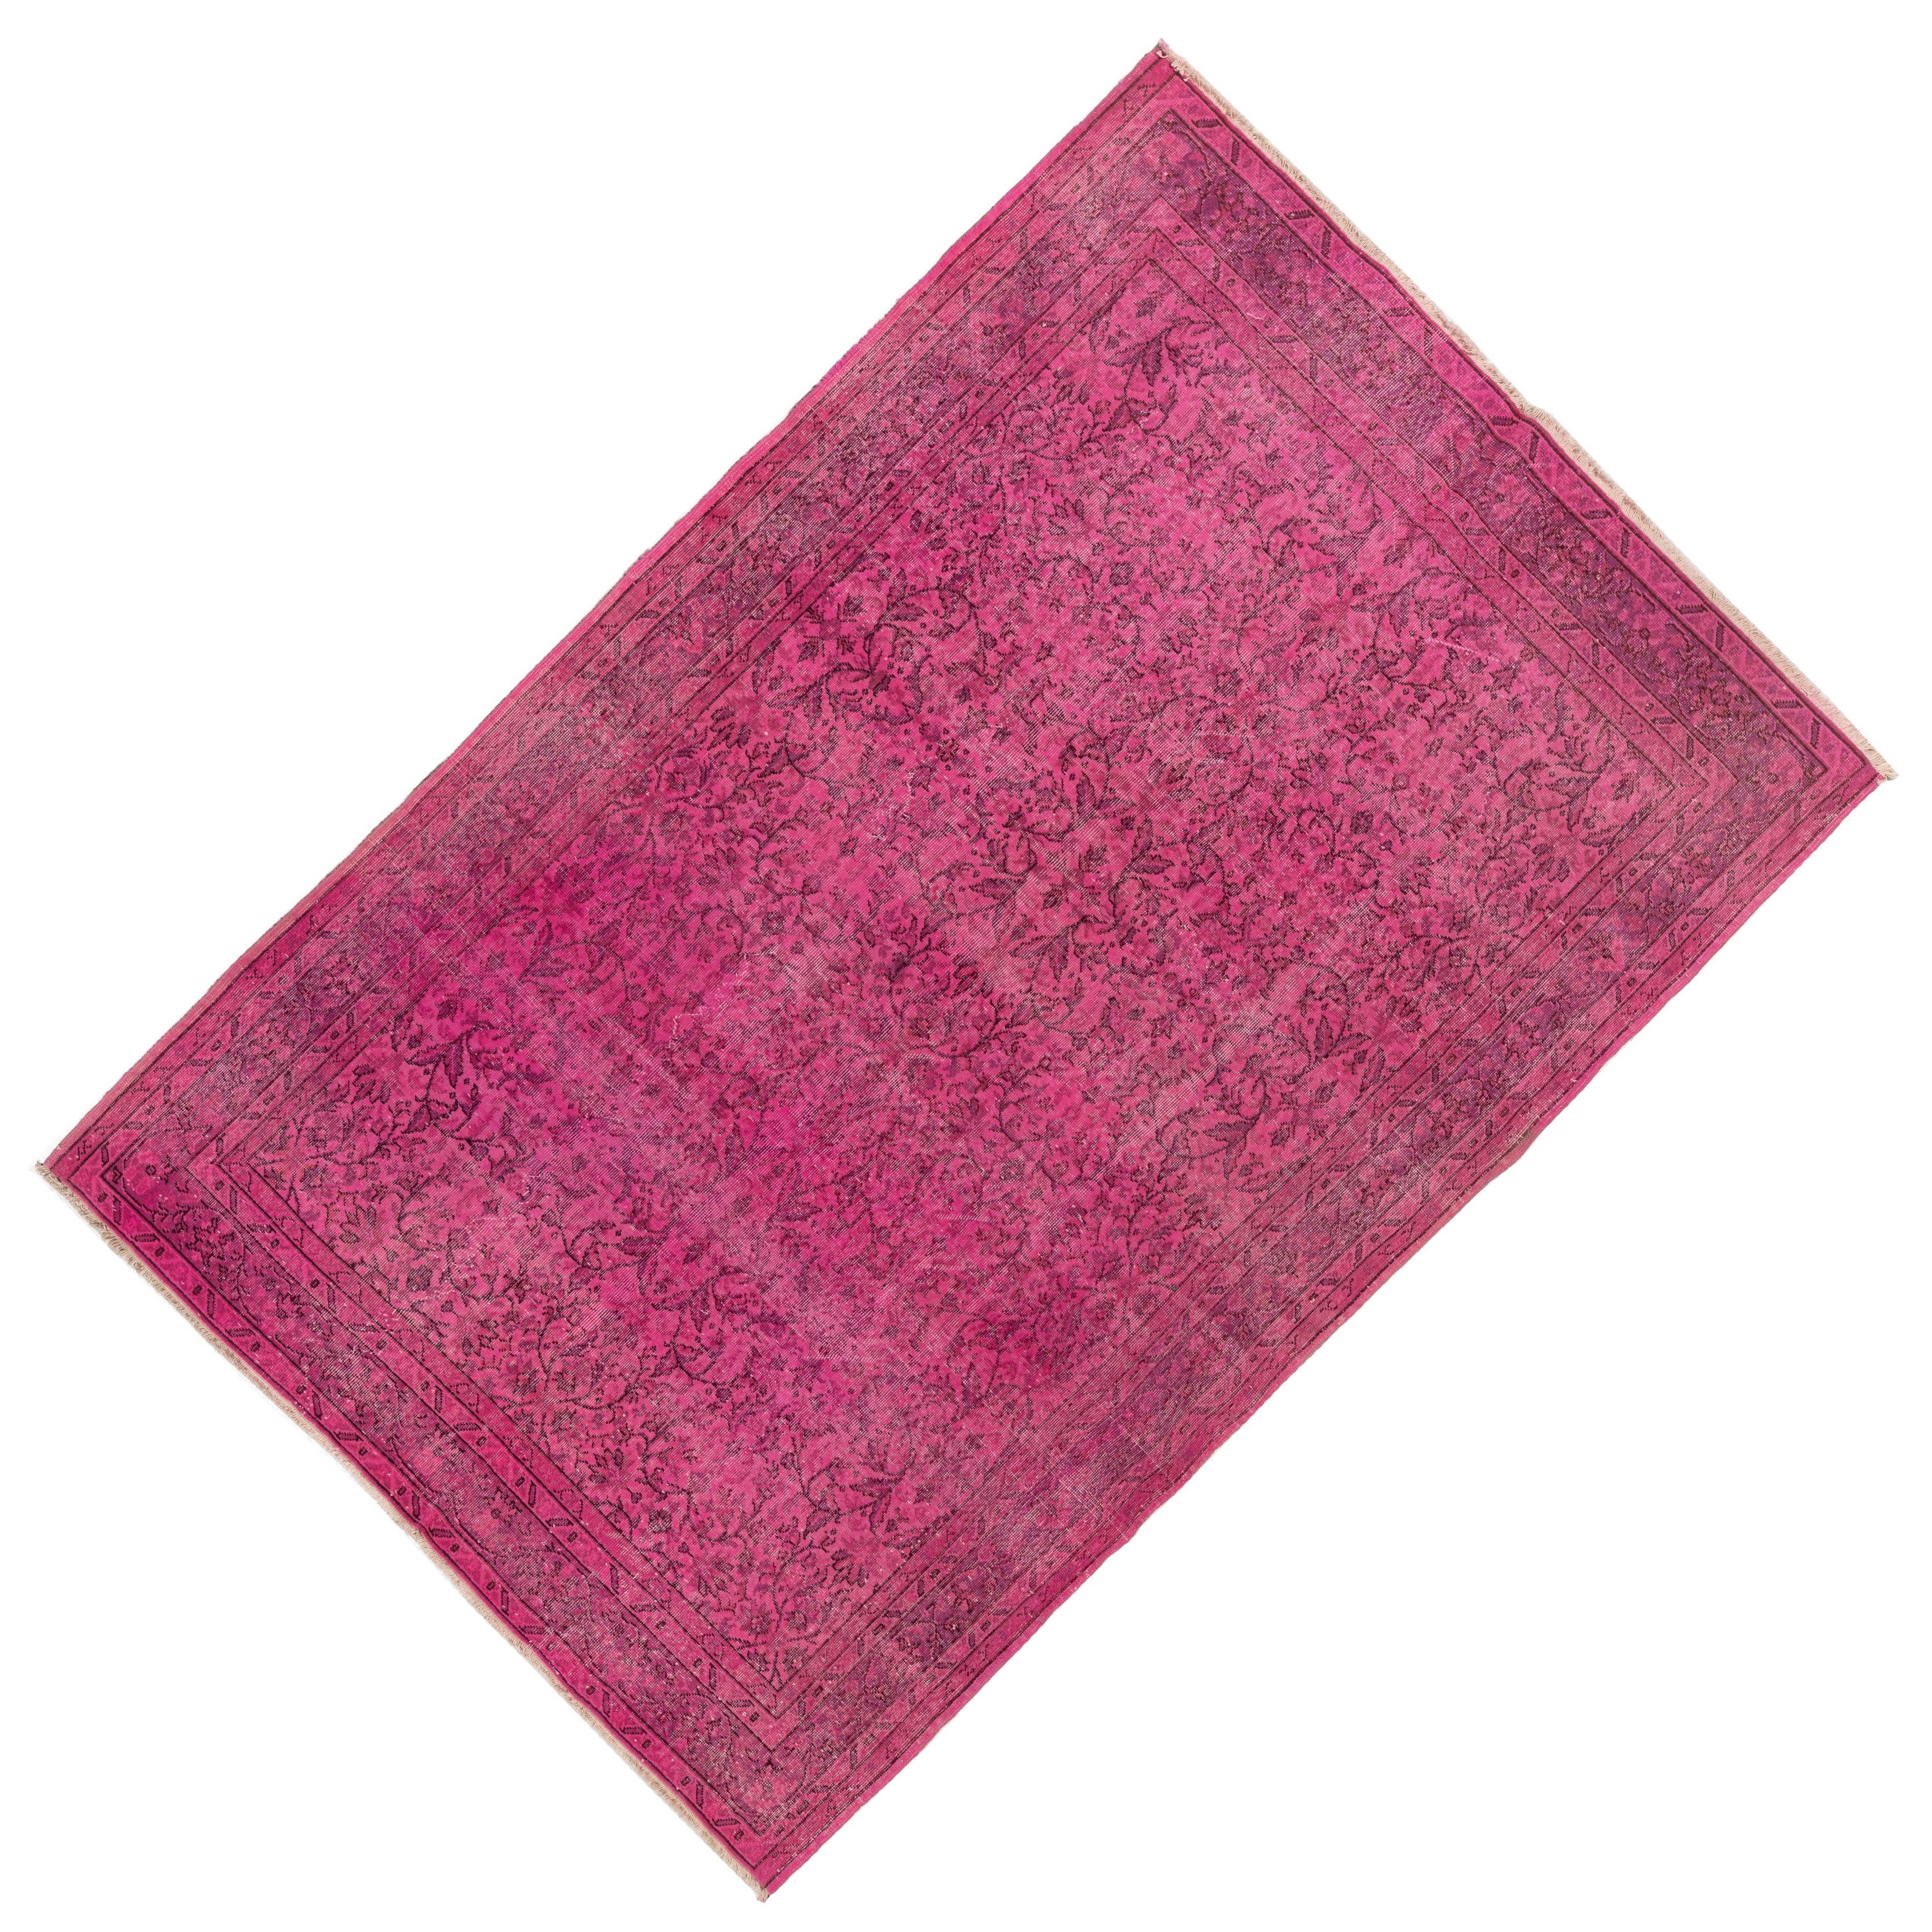 6.7x9.7 Ft Vintage Floral Handmade Turkish Rug Overdyed in Pink for Modern Homes 1